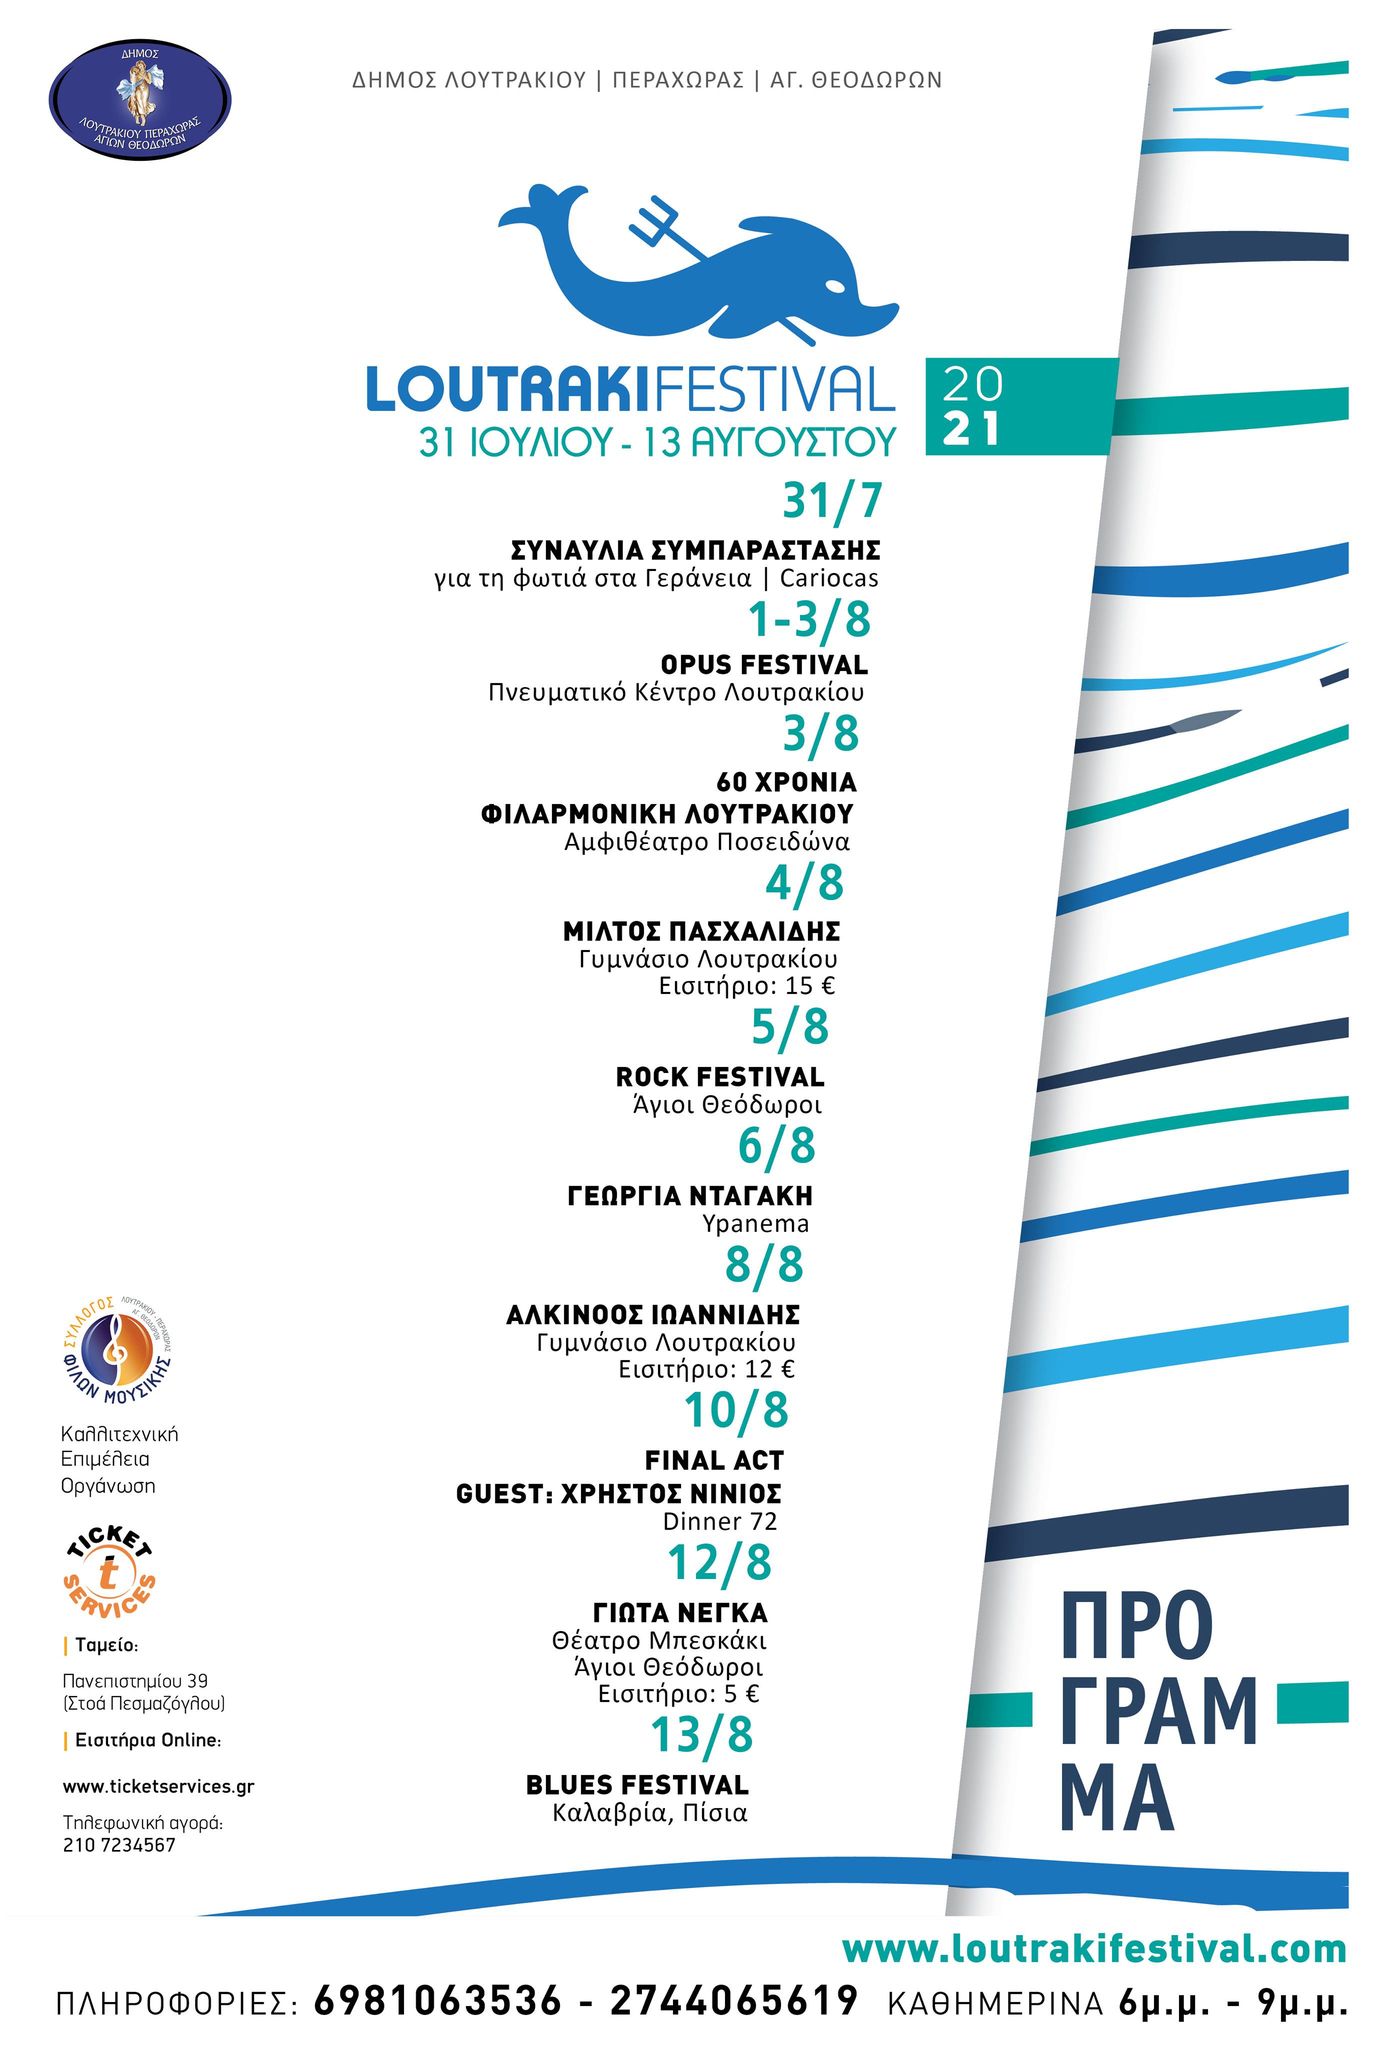 Loutraki Festival 2021 poster